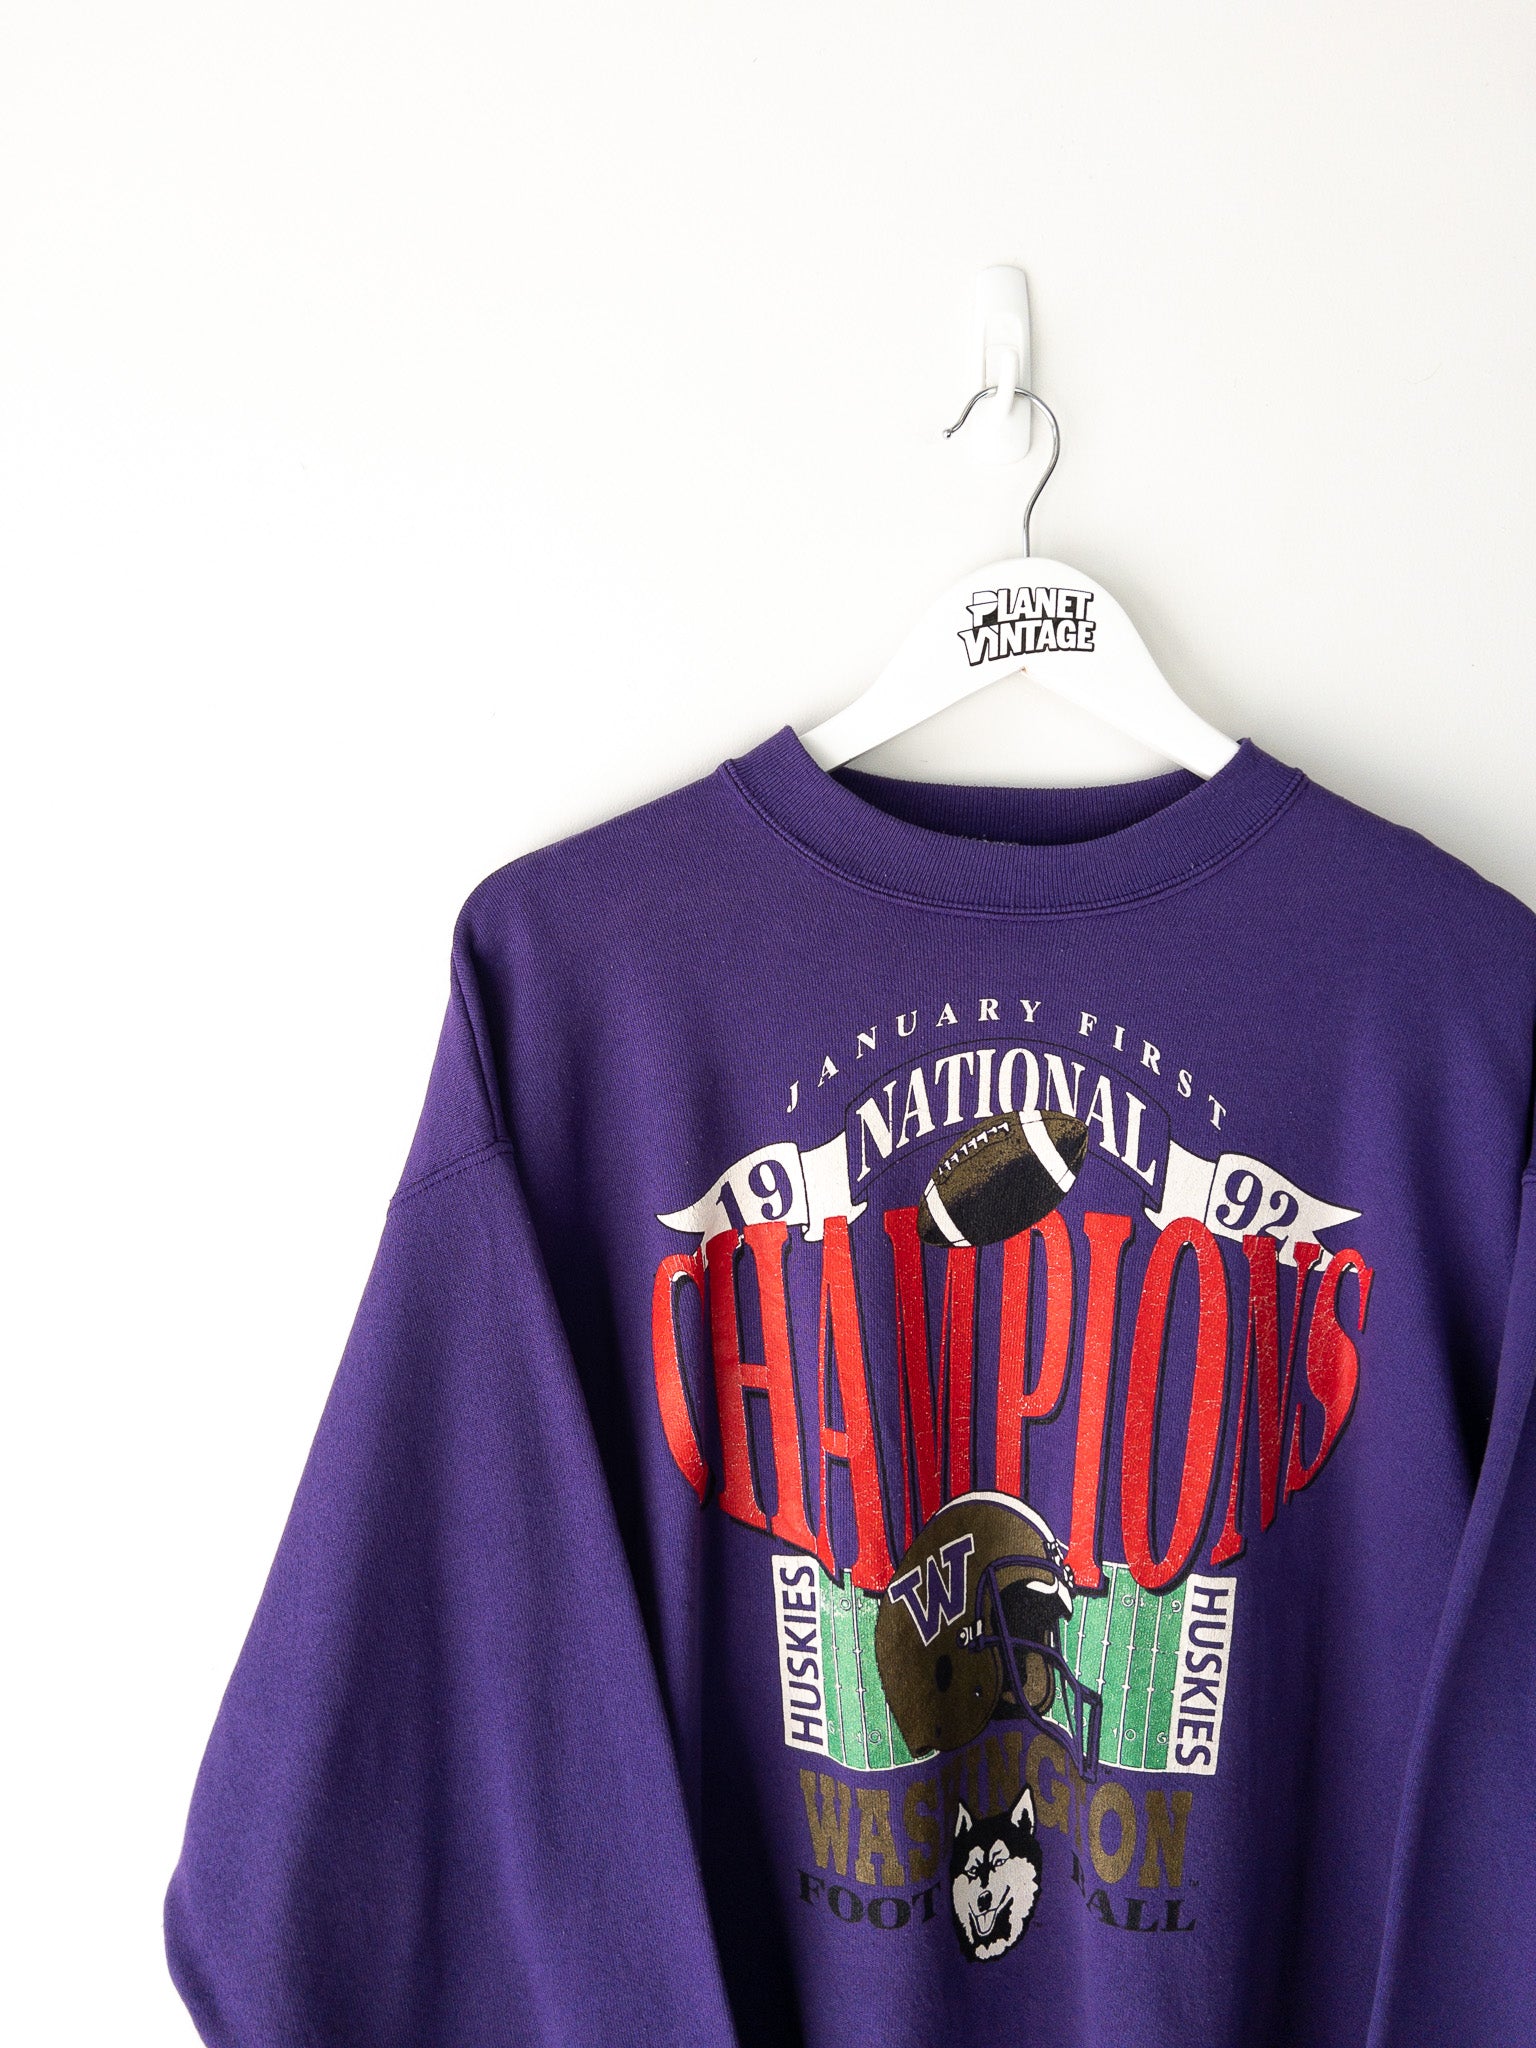 Vintage Washington Huskies 1992 Champions Sweatshirt (XL)